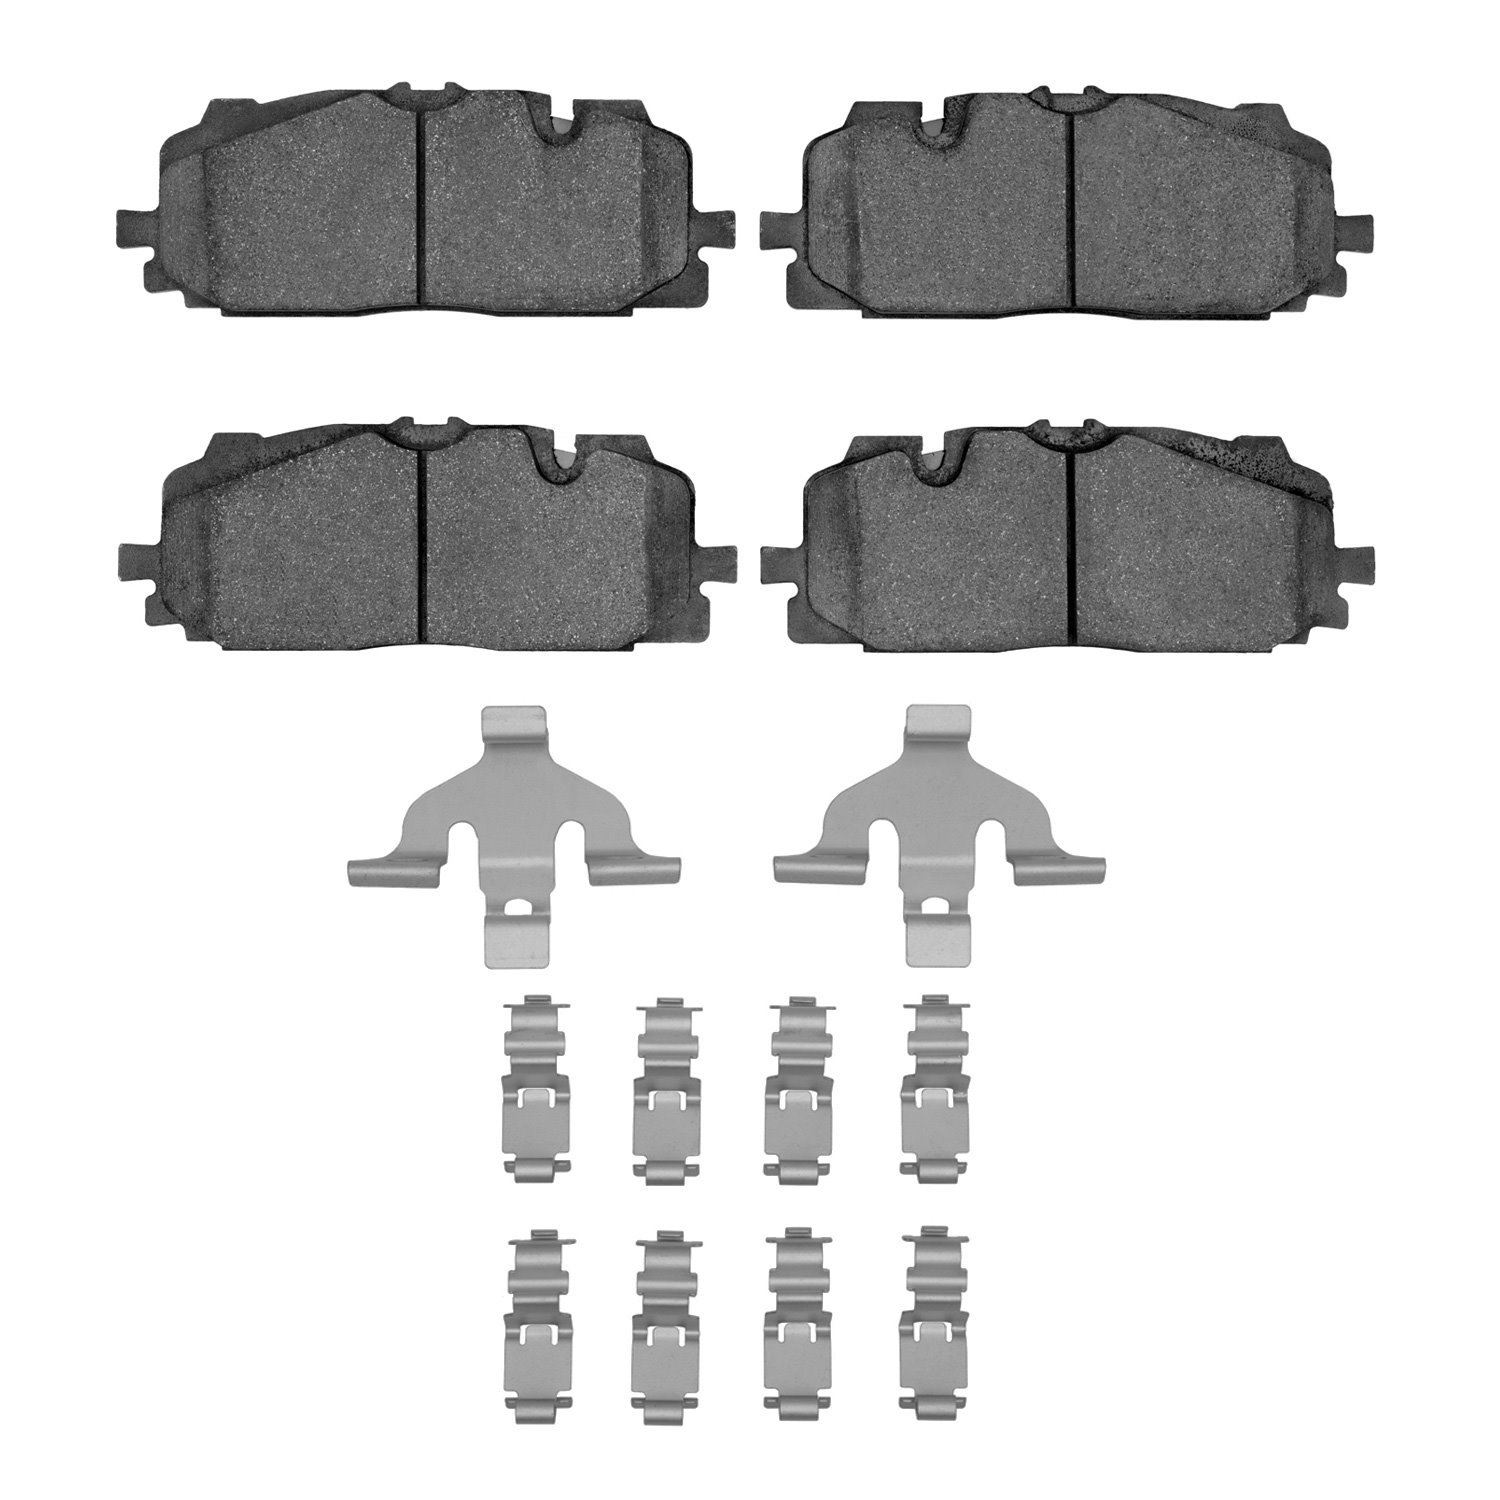 1552-1894-01 5000 Advanced Low-Metallic Brake Pads & Hardware Kit, Fits Select Audi/Volkswagen, Position: Front